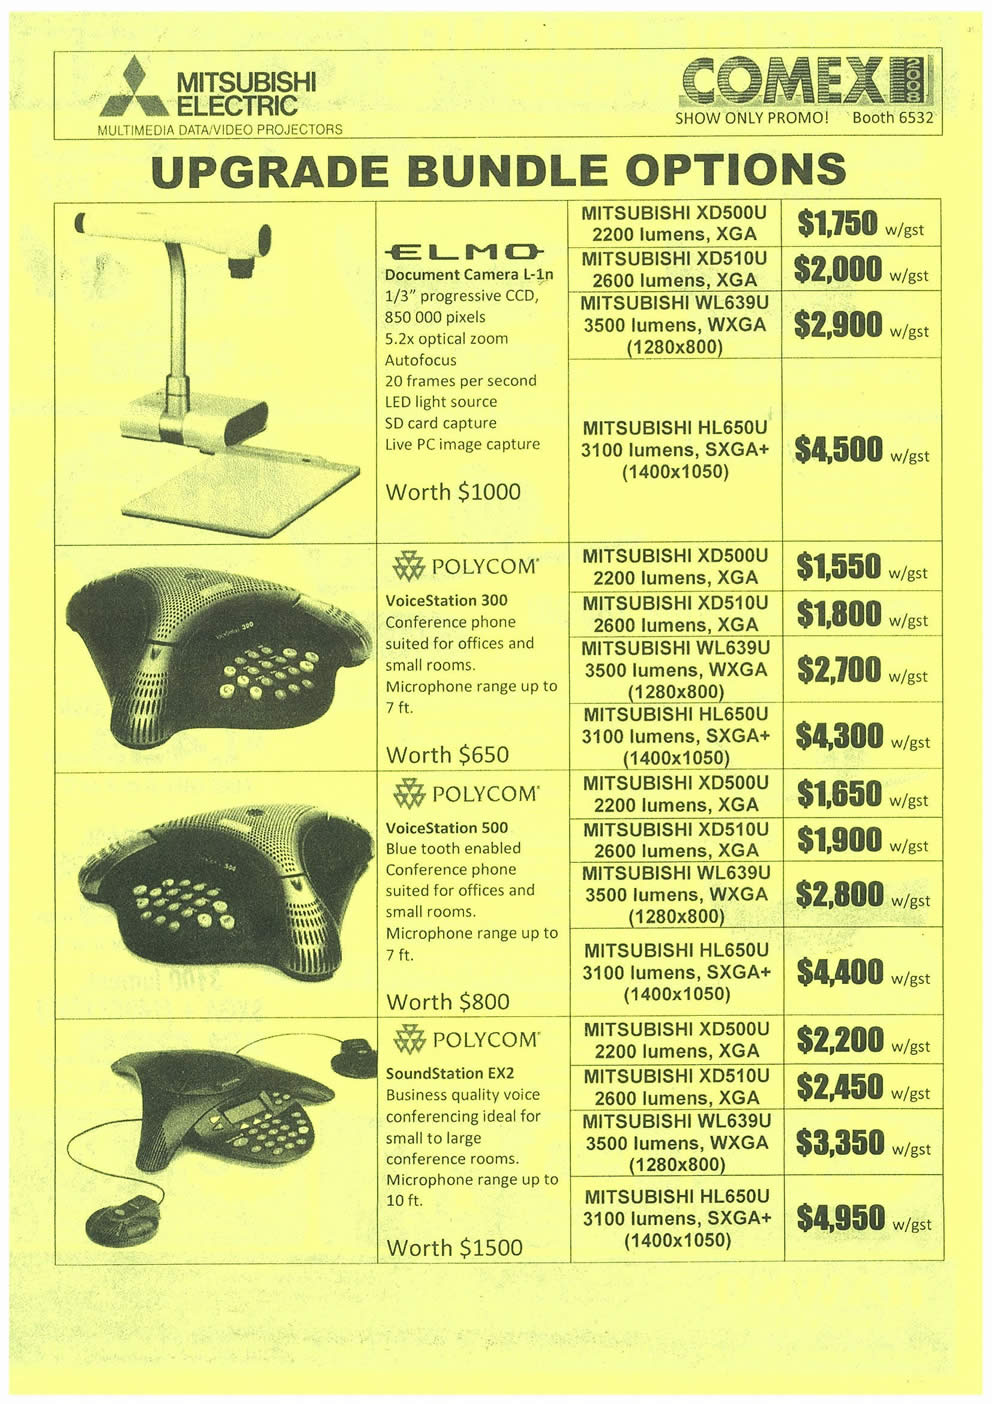 Comex 2008 price list image brochure of Mitsubishi Electric Page 1